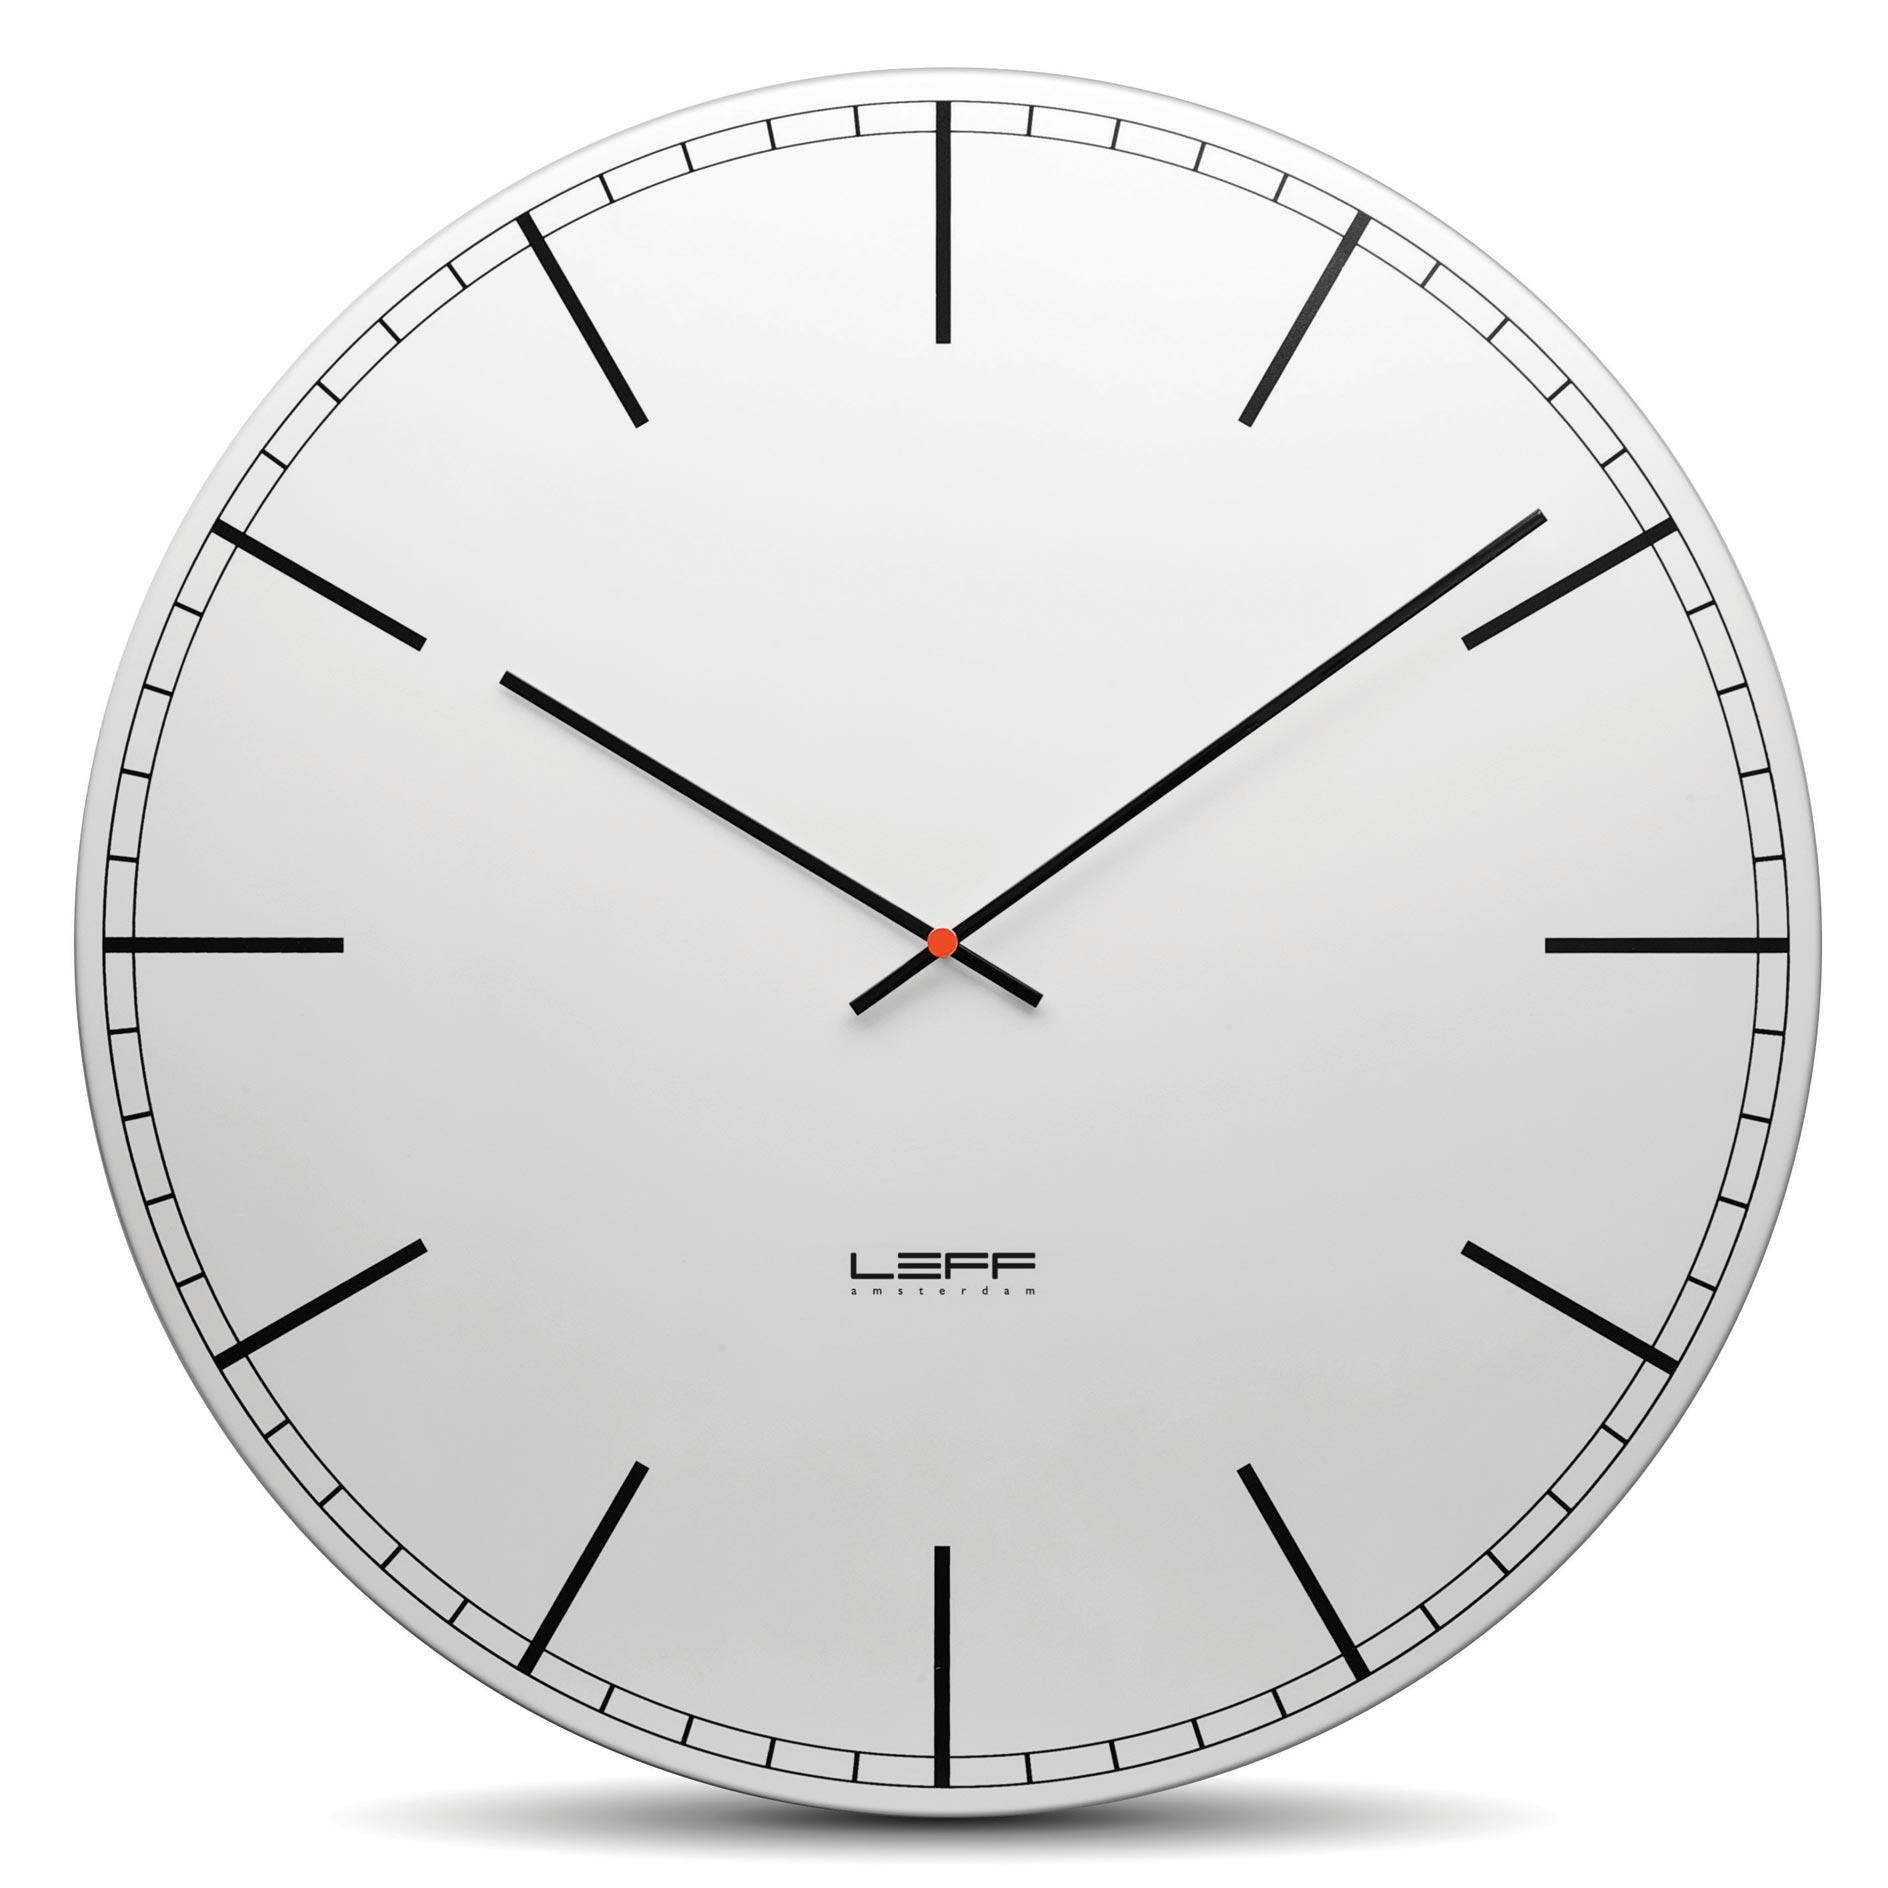 Номер циферблат. Часы Leff Amsterdam настенные. Настенные часы Leff lt11006. Часы круглые. Часы без циферблата настенные.